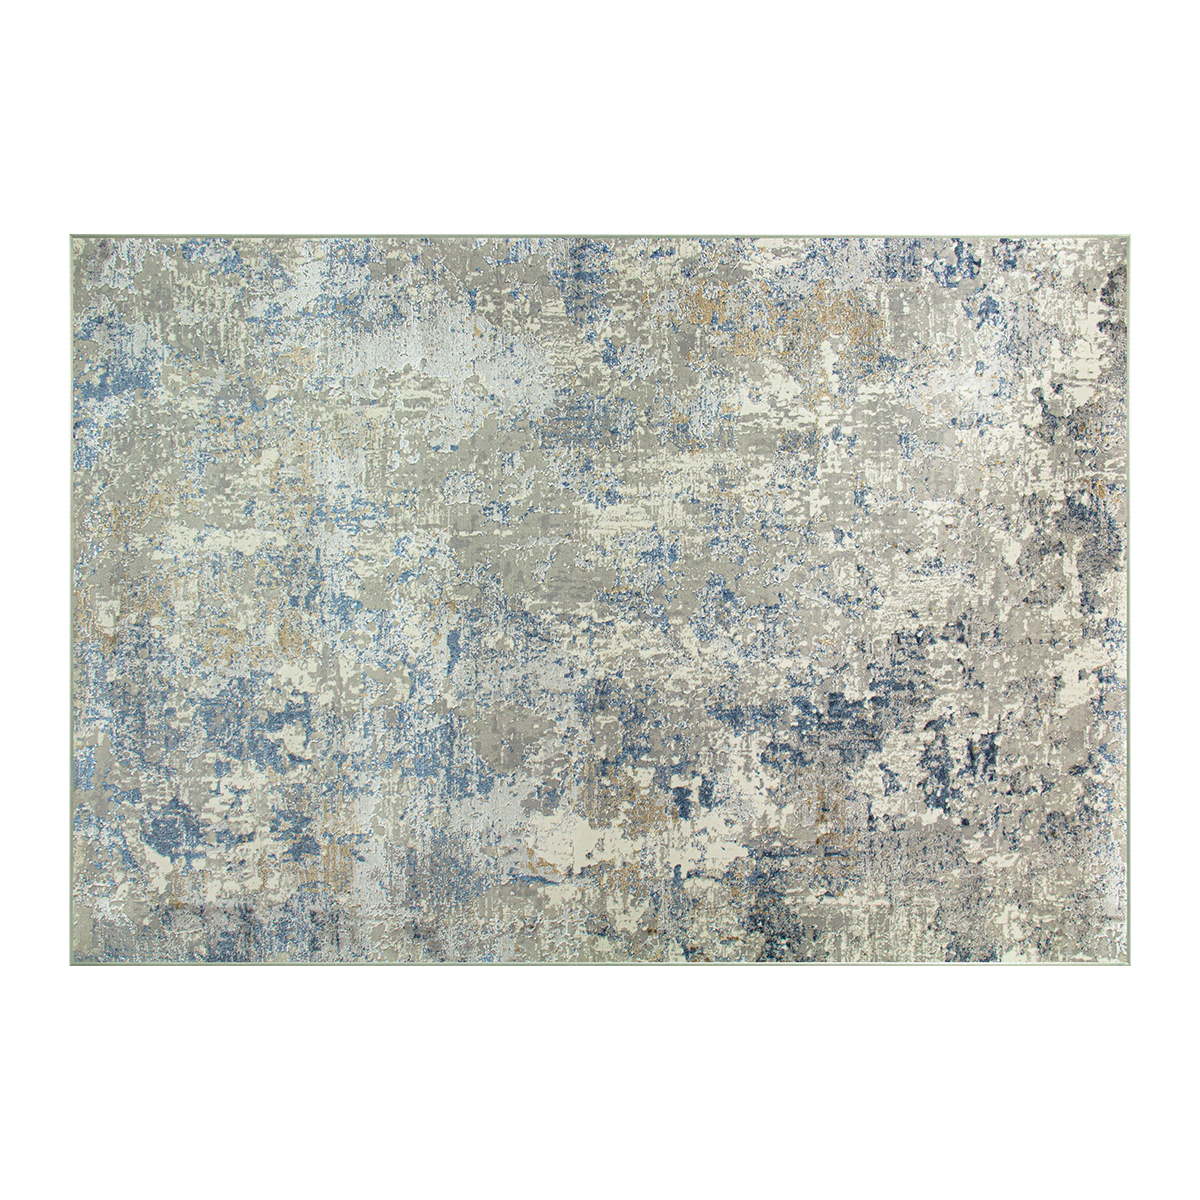 Tapete gris oxford y azul 160 cm x 230cm - T2096 Darica